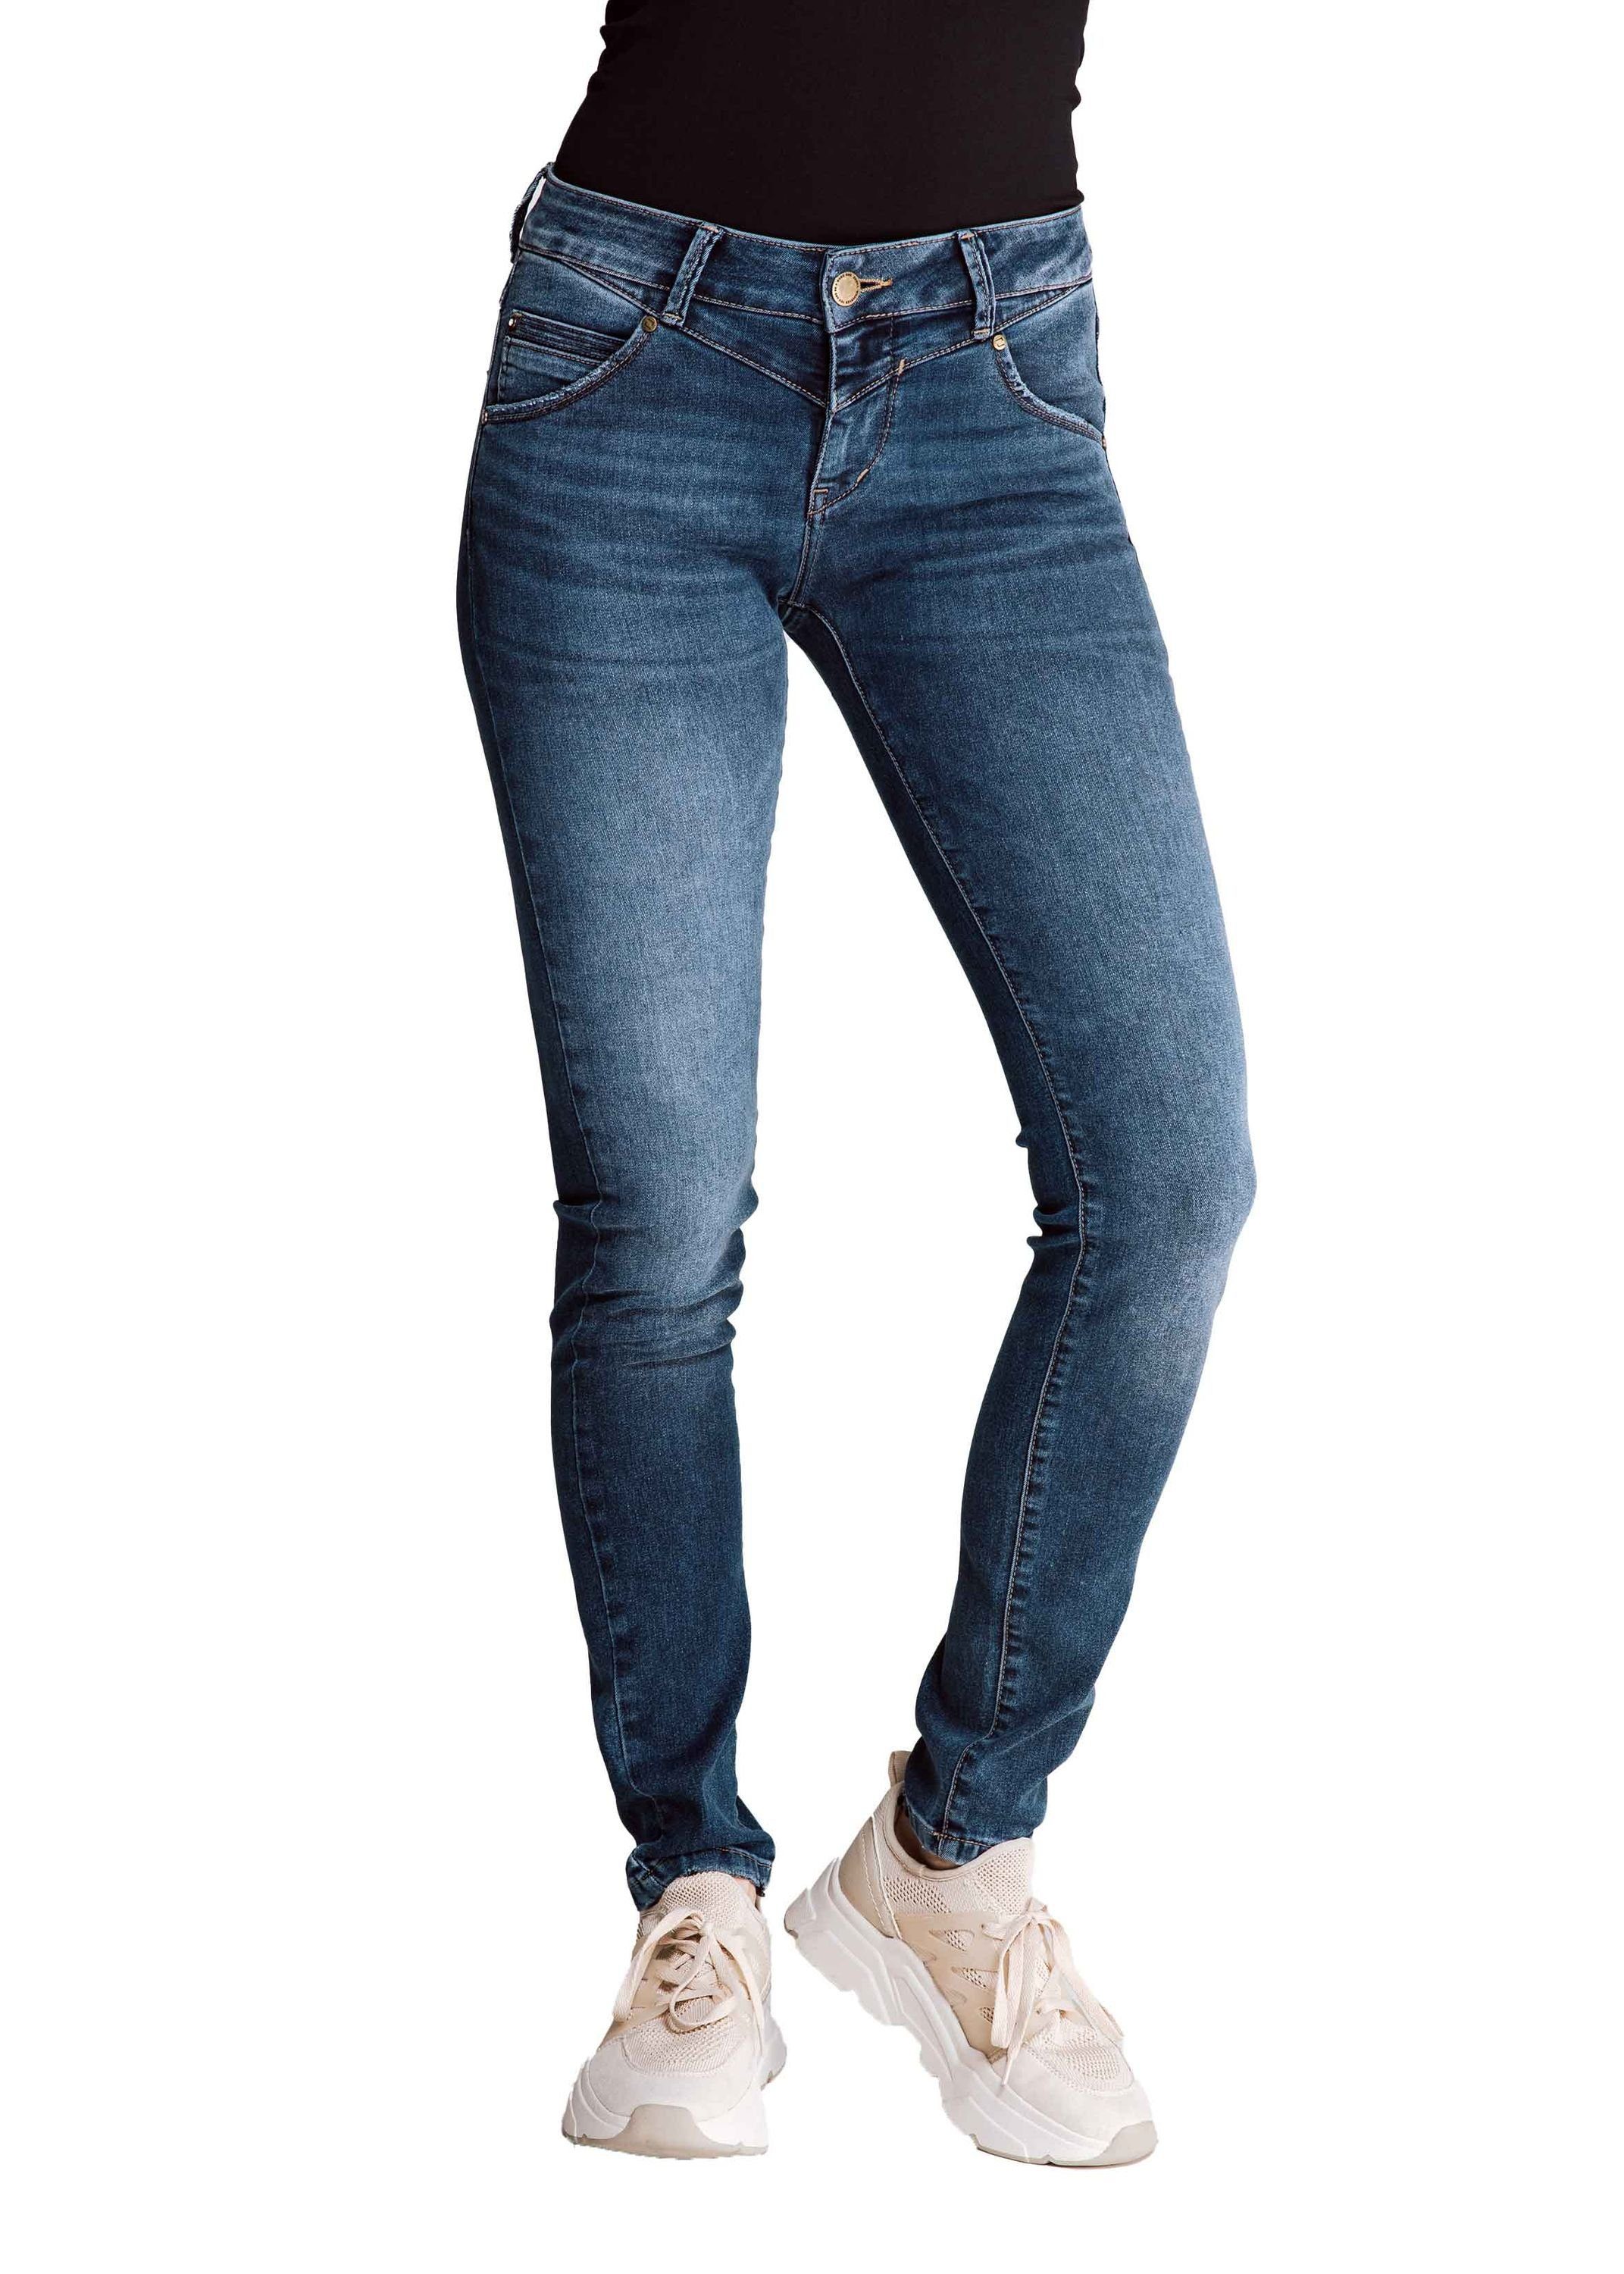 Skinny DONDI Zhrill Blue angenehmer Tragekomfort Jeans Skinny-fit-Jeans